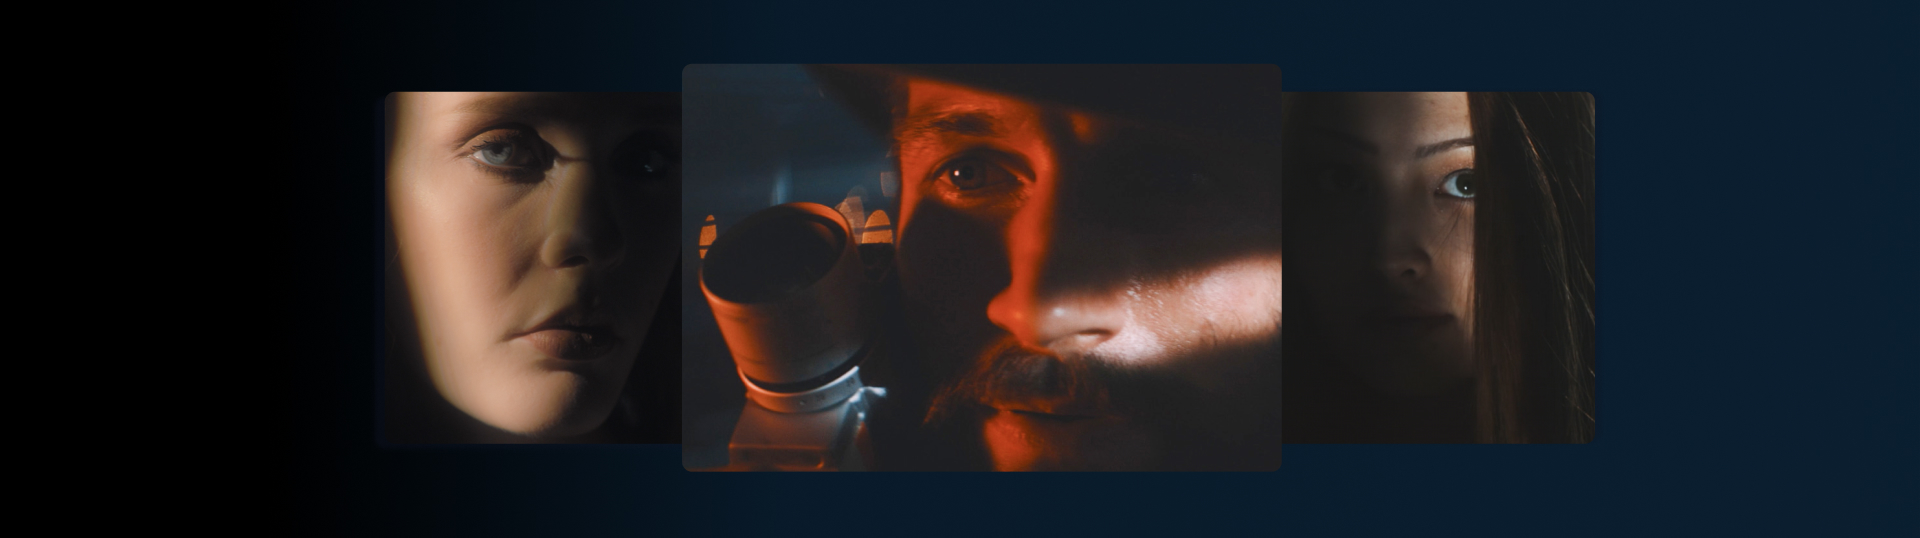 Chiaroscuro Lighting in Film